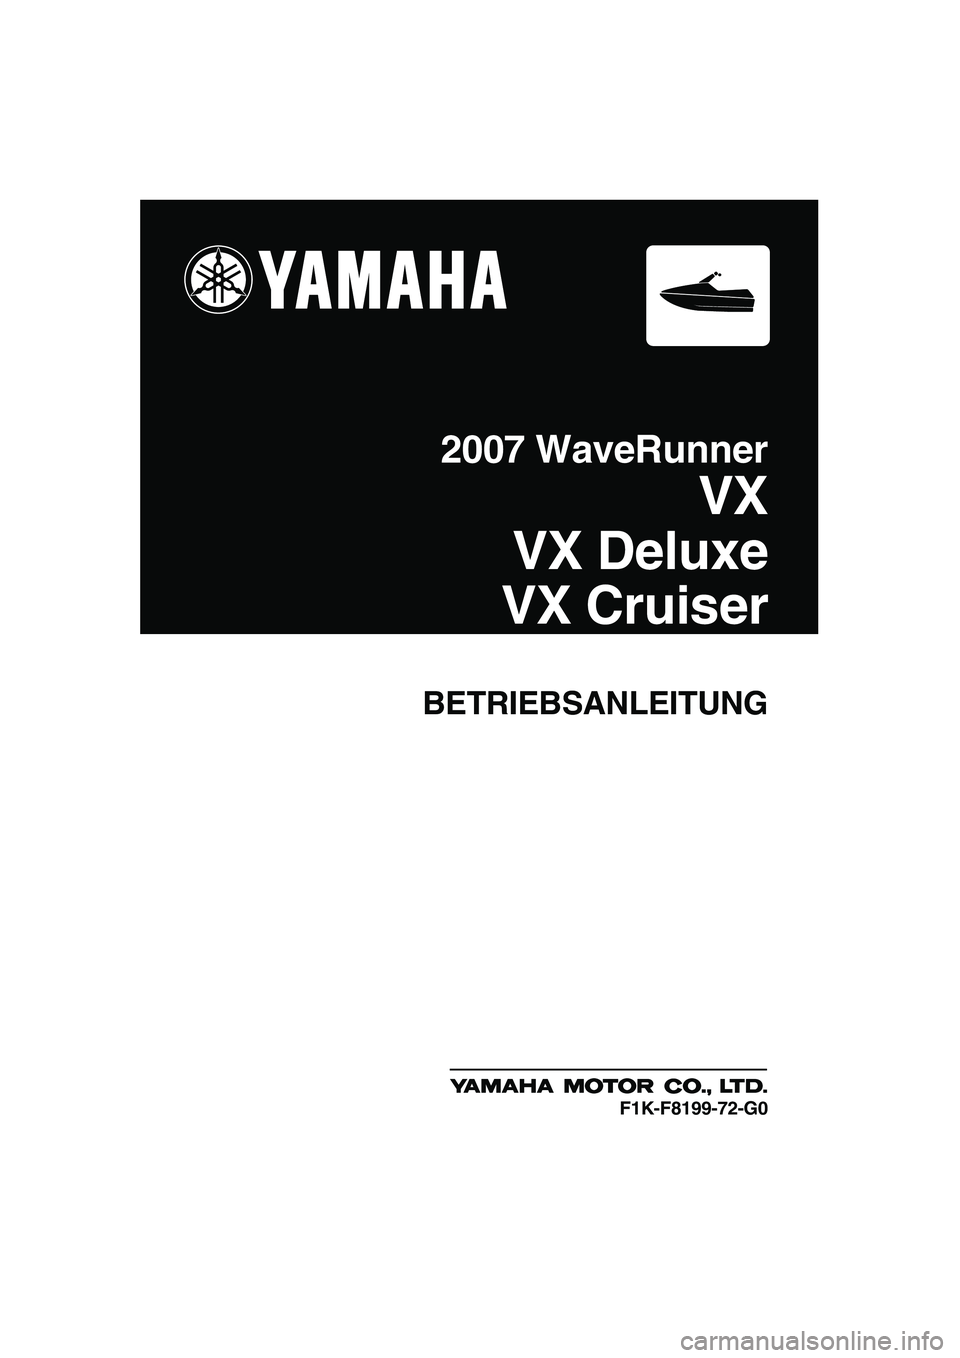 YAMAHA VX DELUXE 2007  Betriebsanleitungen (in German) BETRIEBSANLEITUNG
2007 WaveRunner
VX
VX Deluxe
VX Cruiser
F1K-F8199-72-G0
UF1K72G0.book  Page 1  Thursday, August 3, 2006  10:08 AM 